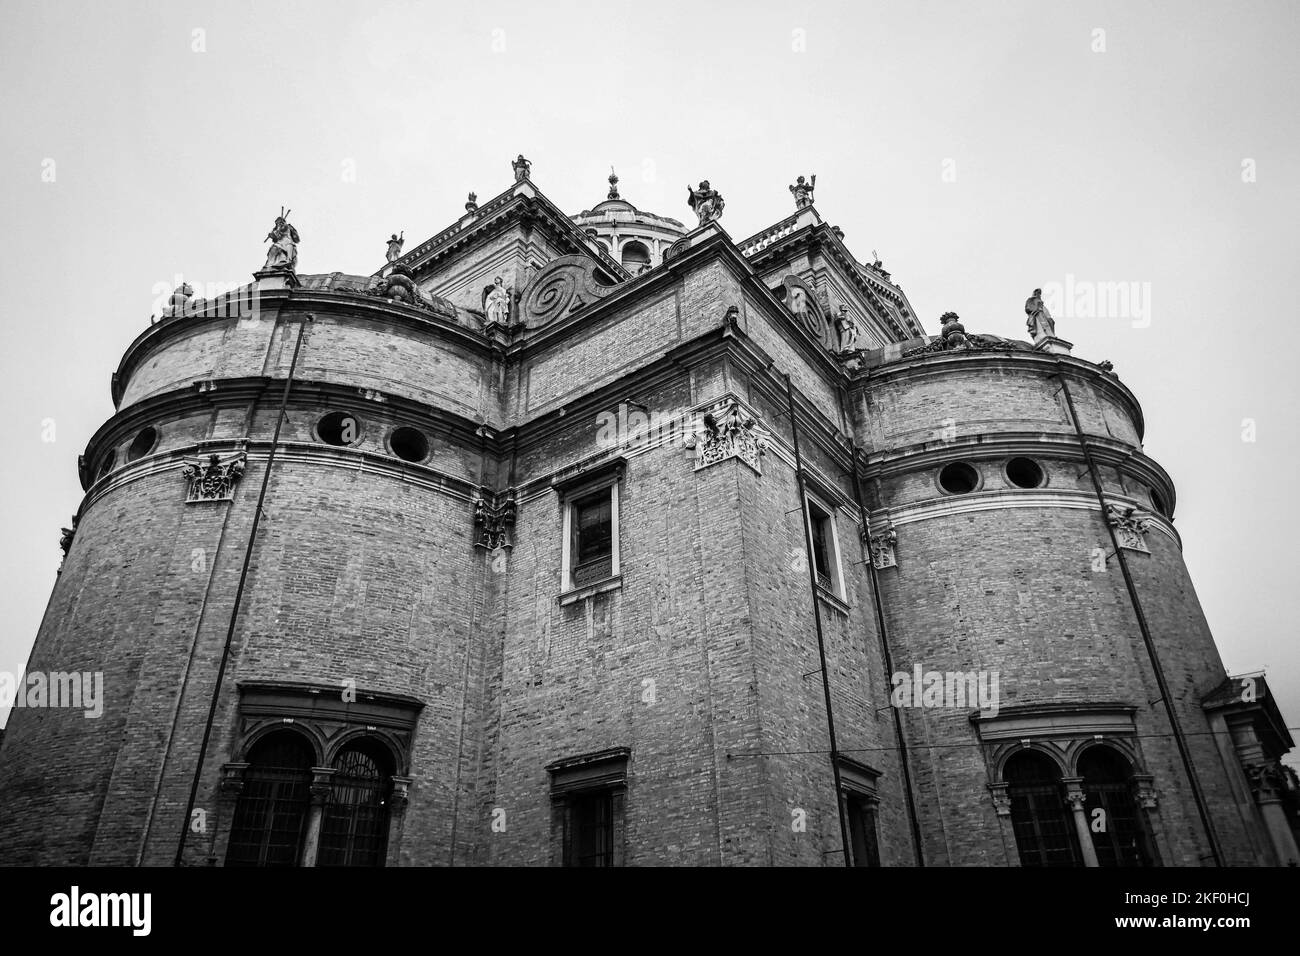 La basilique Renaissance de Santa Maria della Steccata, Parme, Italie Banque D'Images